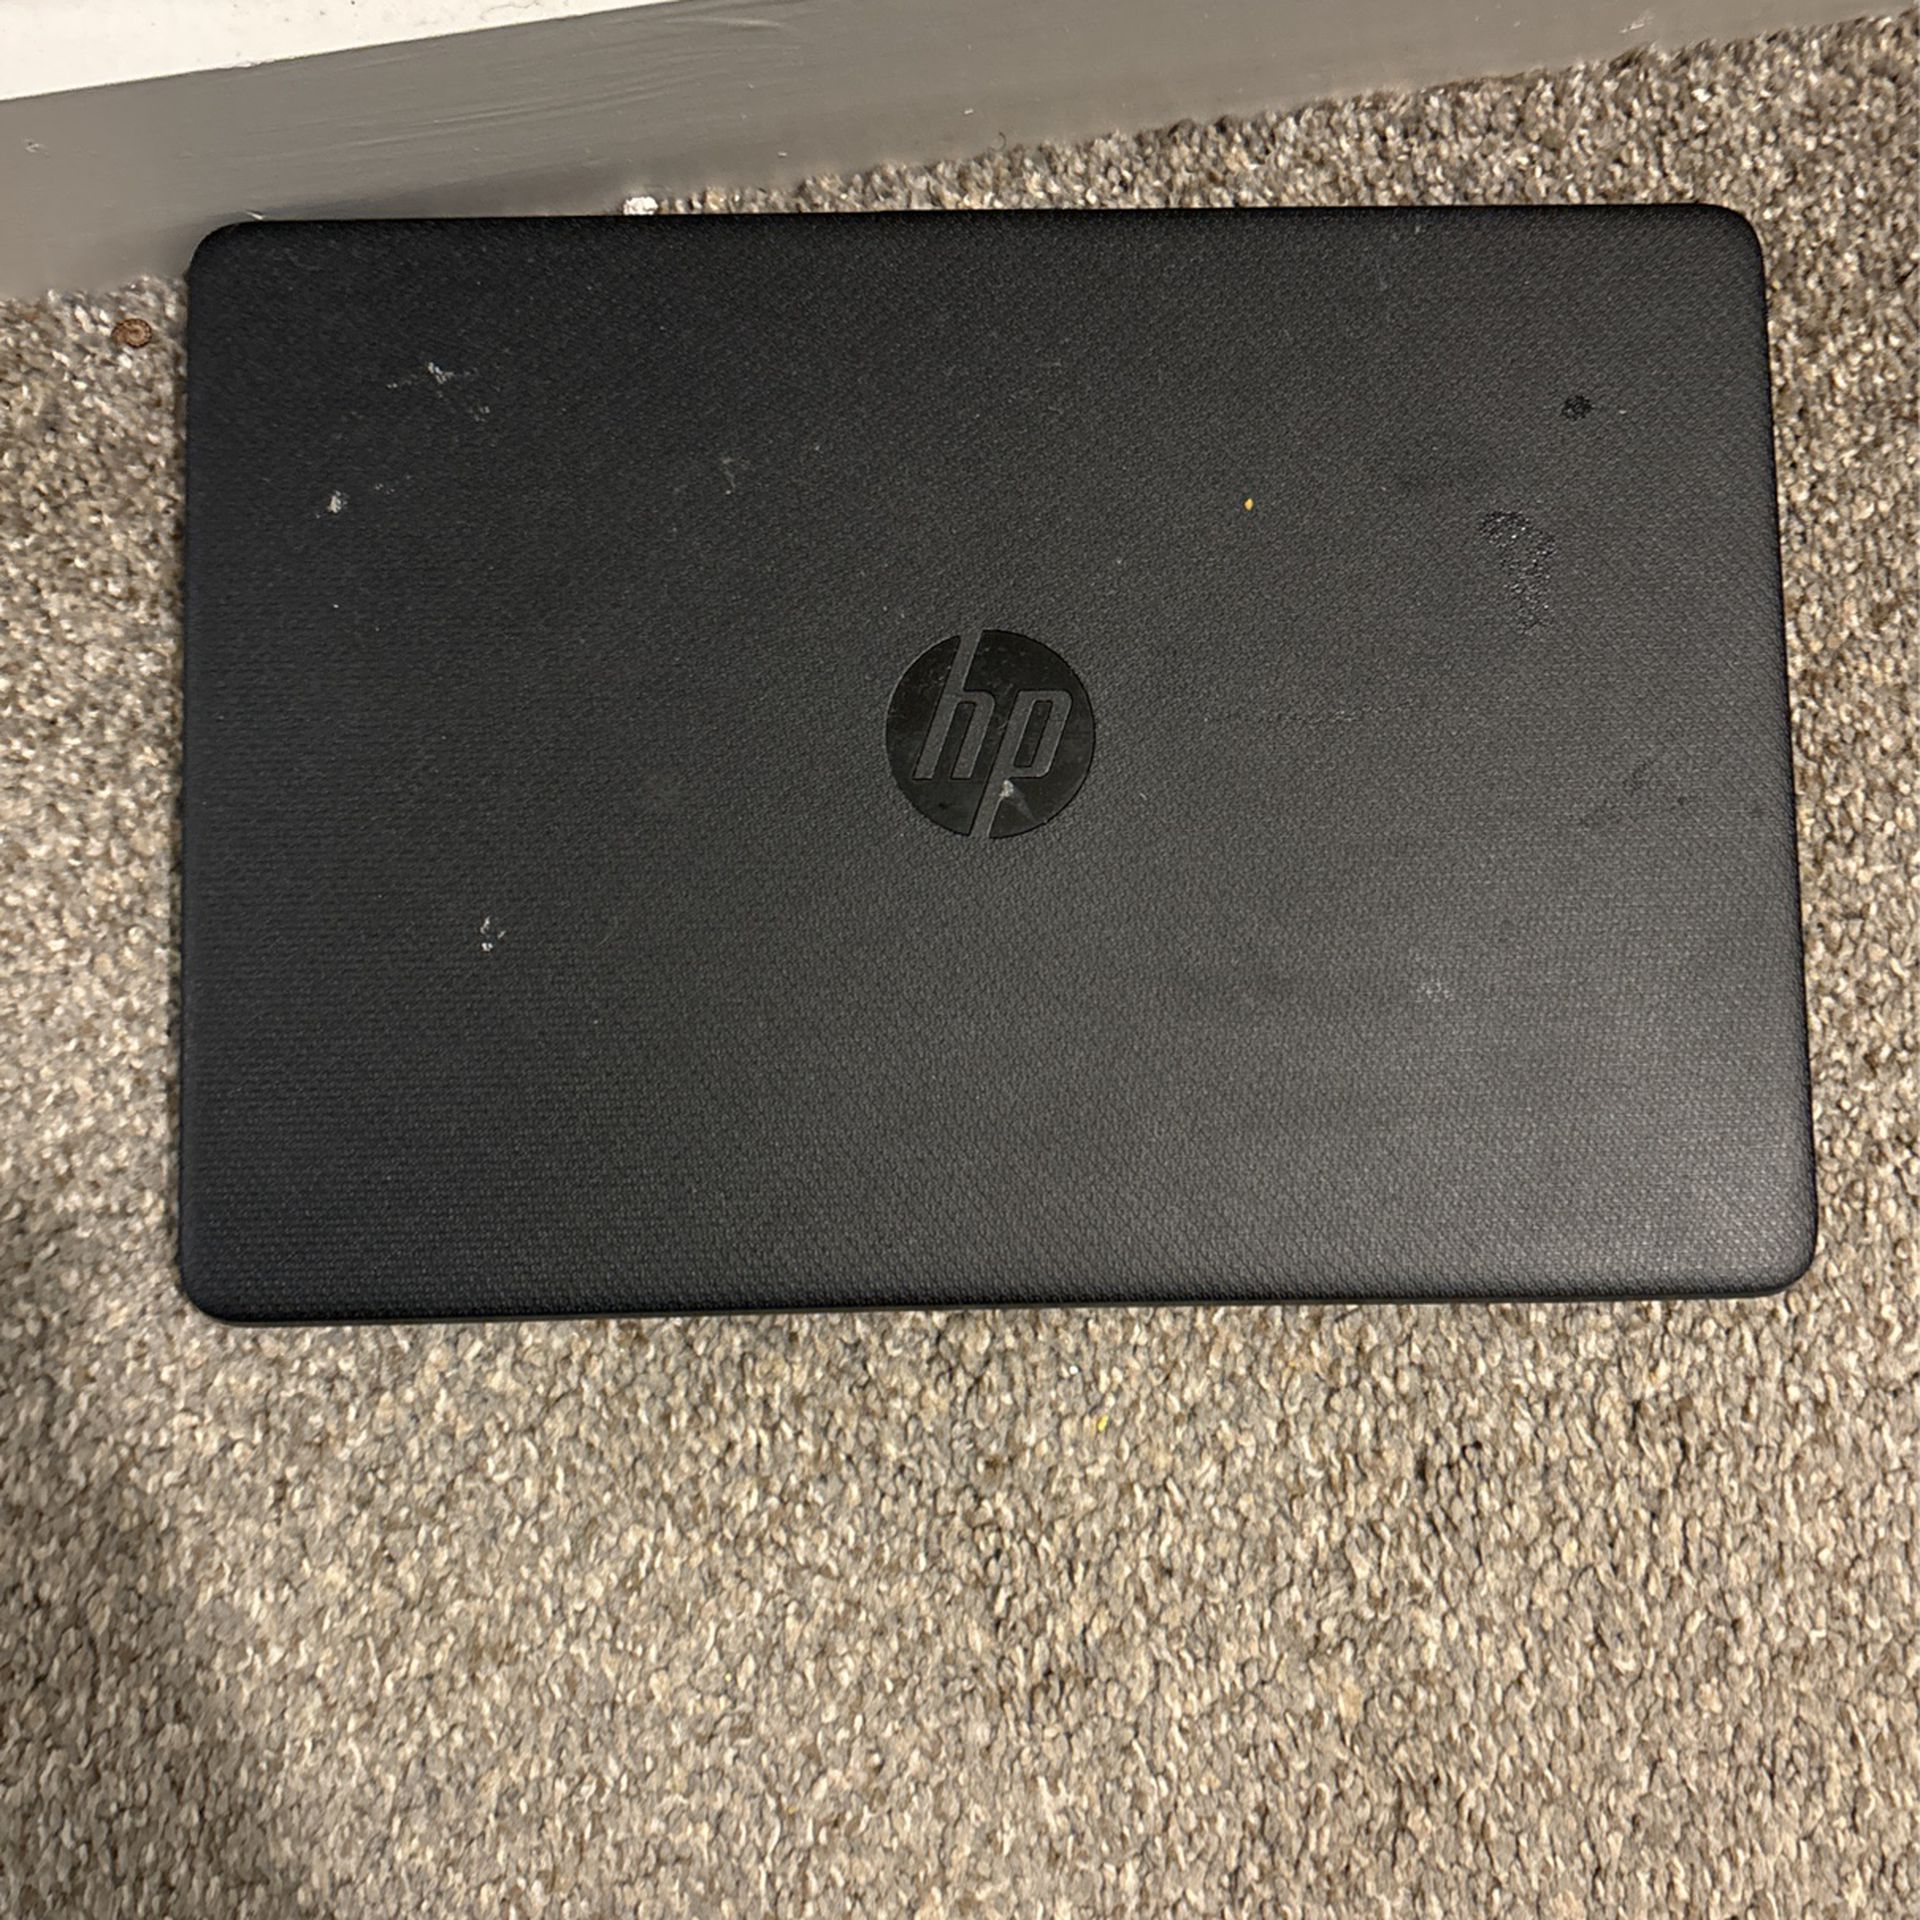 Intel Hp Laptop